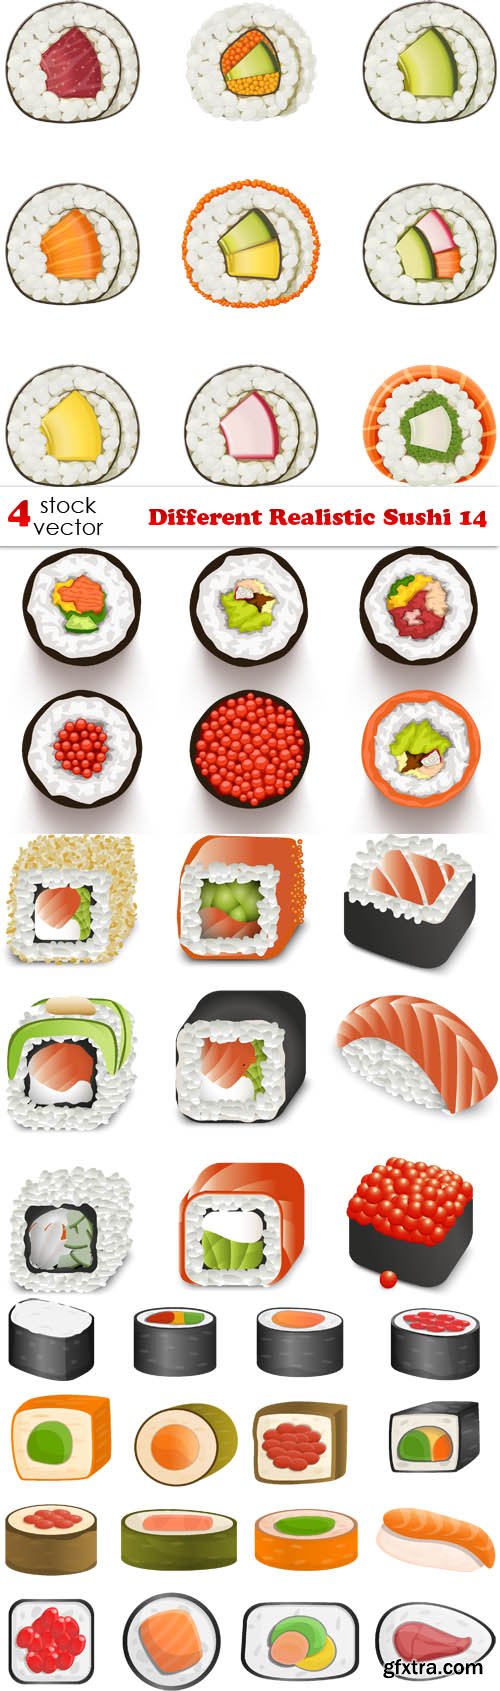 Vectors - Different Realistic Sushi 14